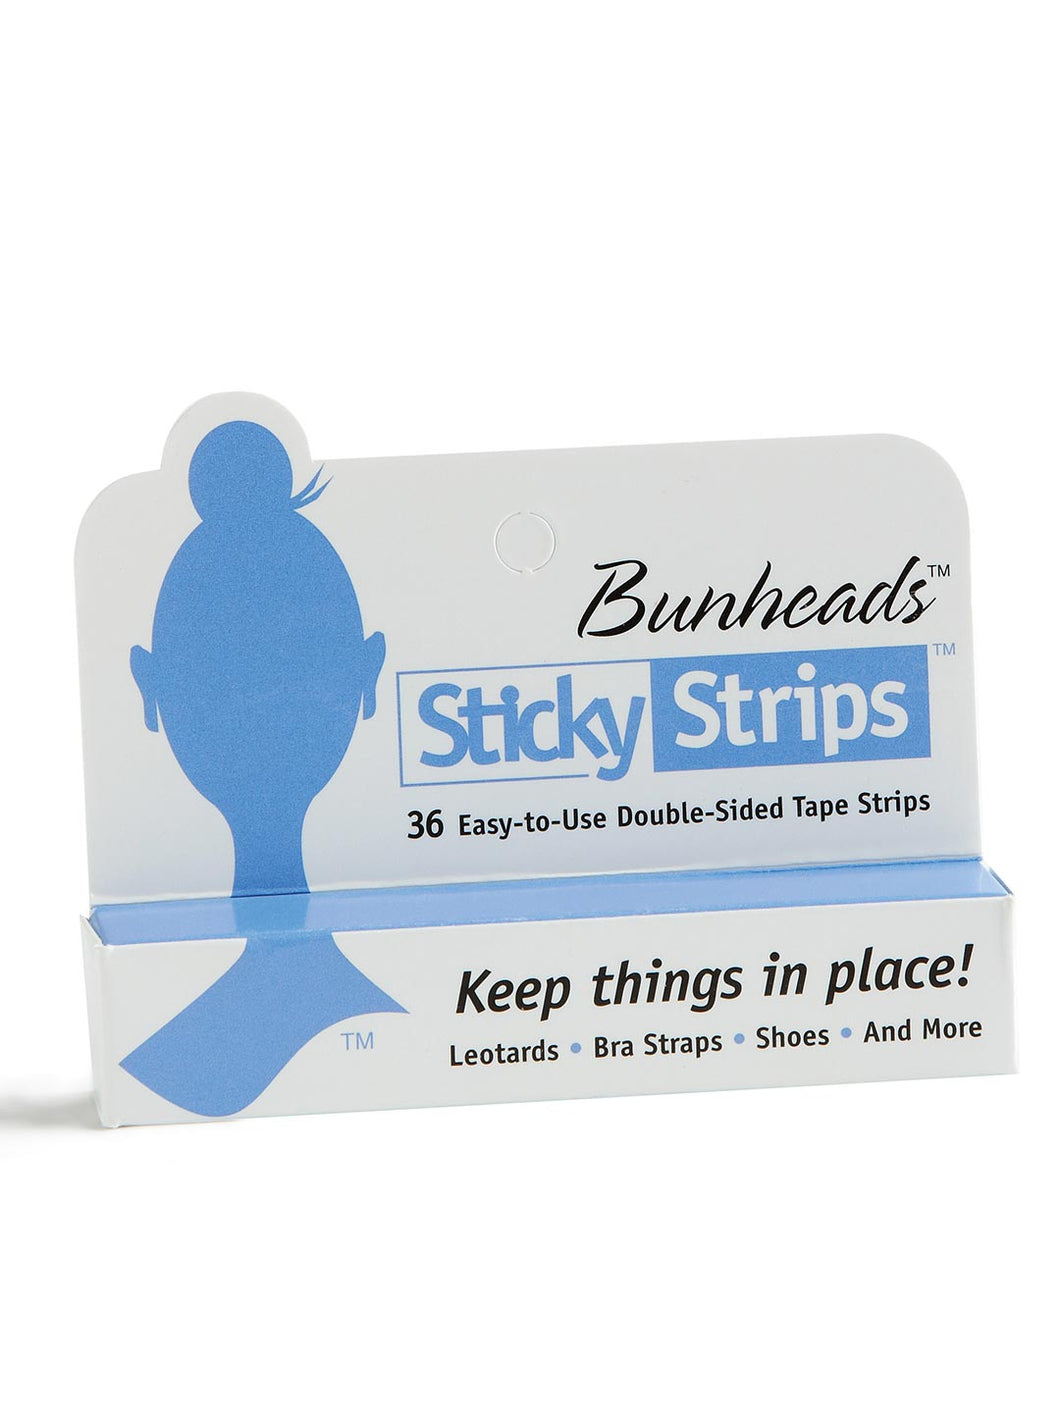 Accessories- Bunheads Sticky Strips